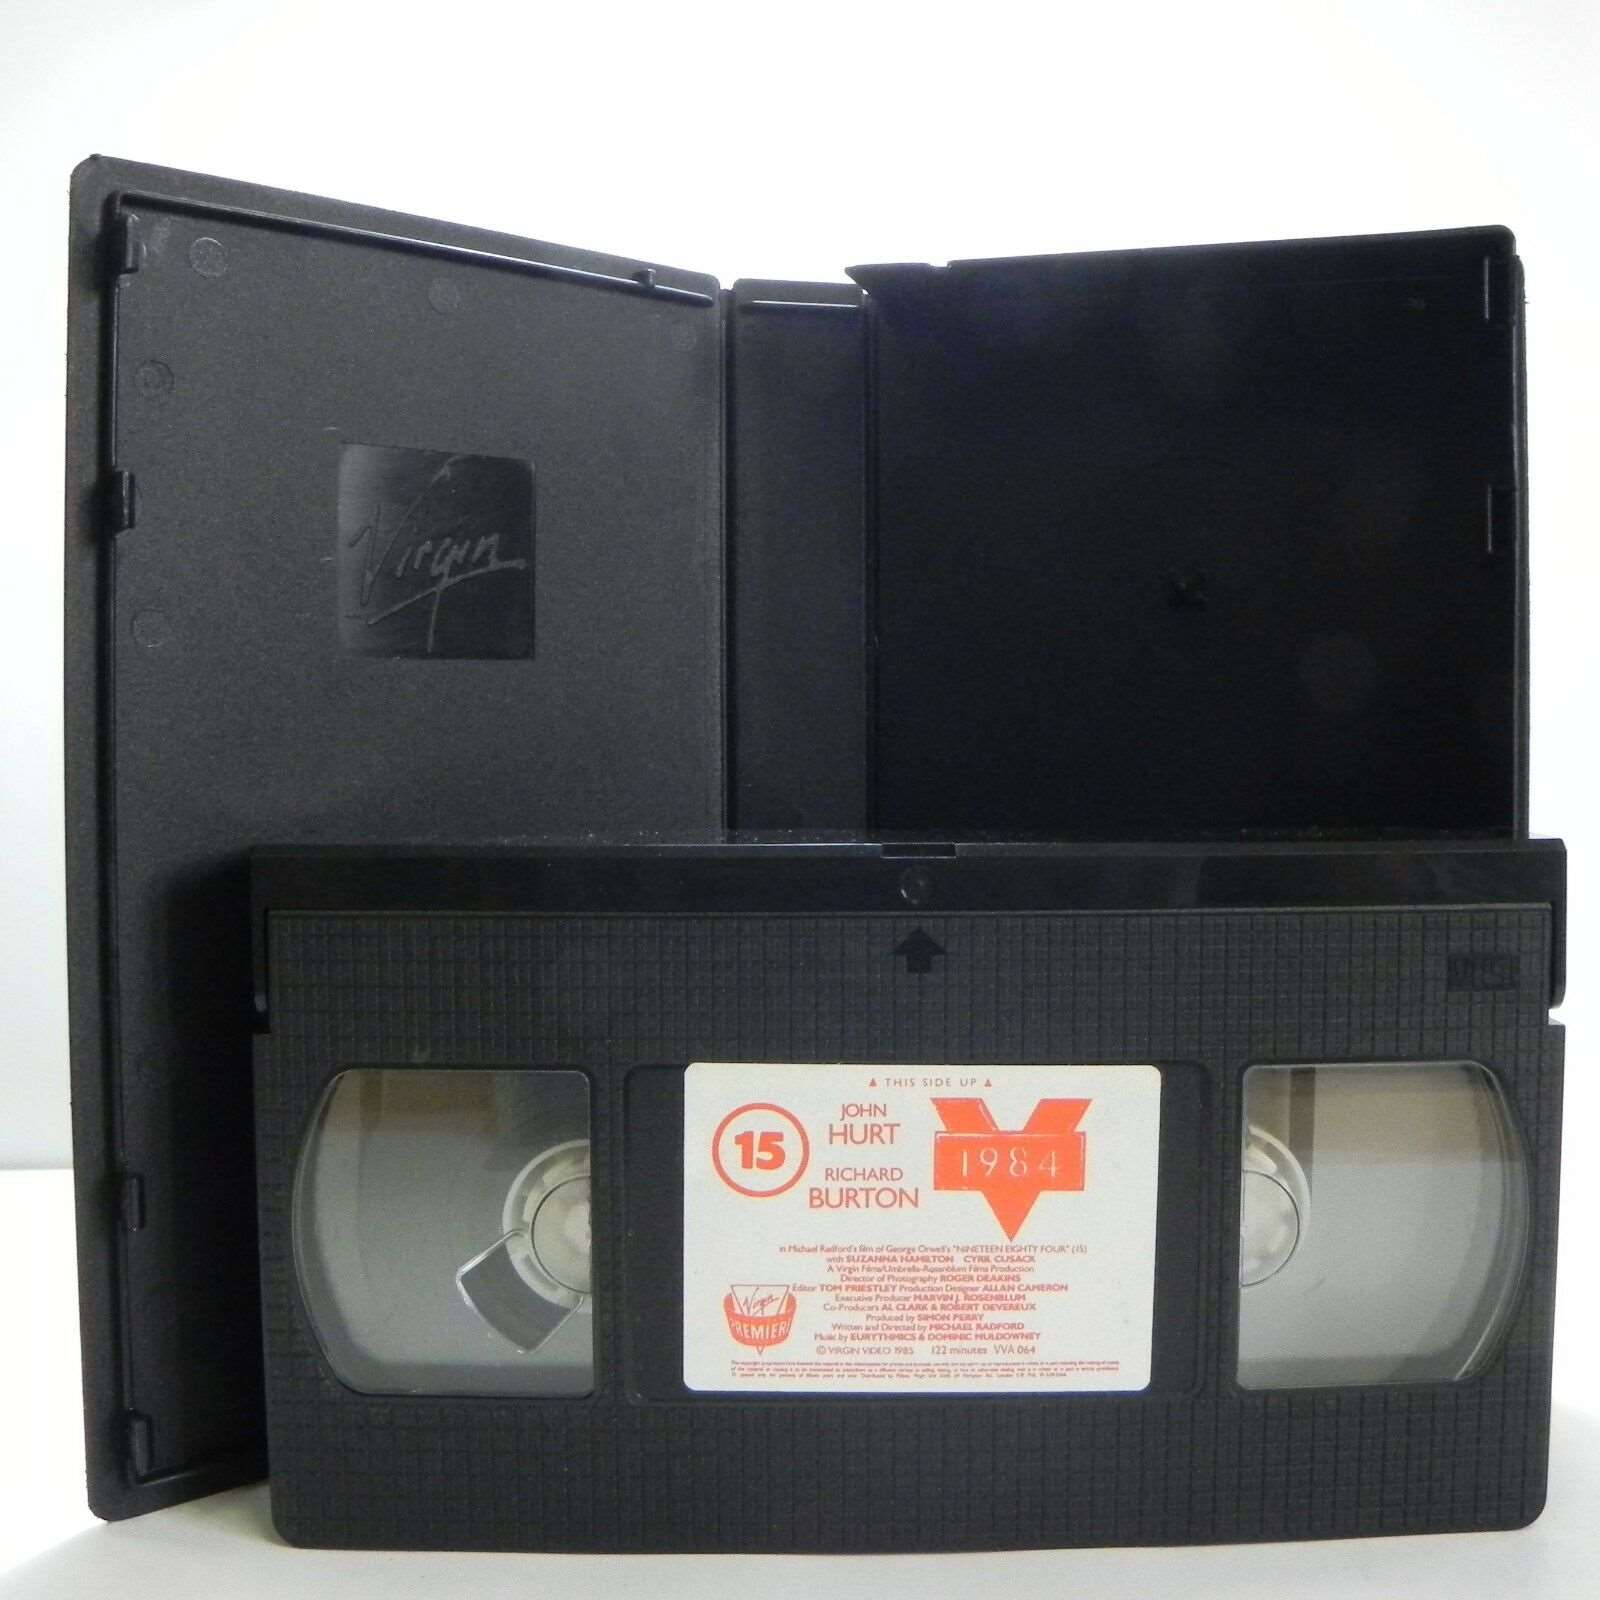 1984: By G.Orwell Classic Novel - Drama - Masterpiece - Richard Burton - Pal VHS-